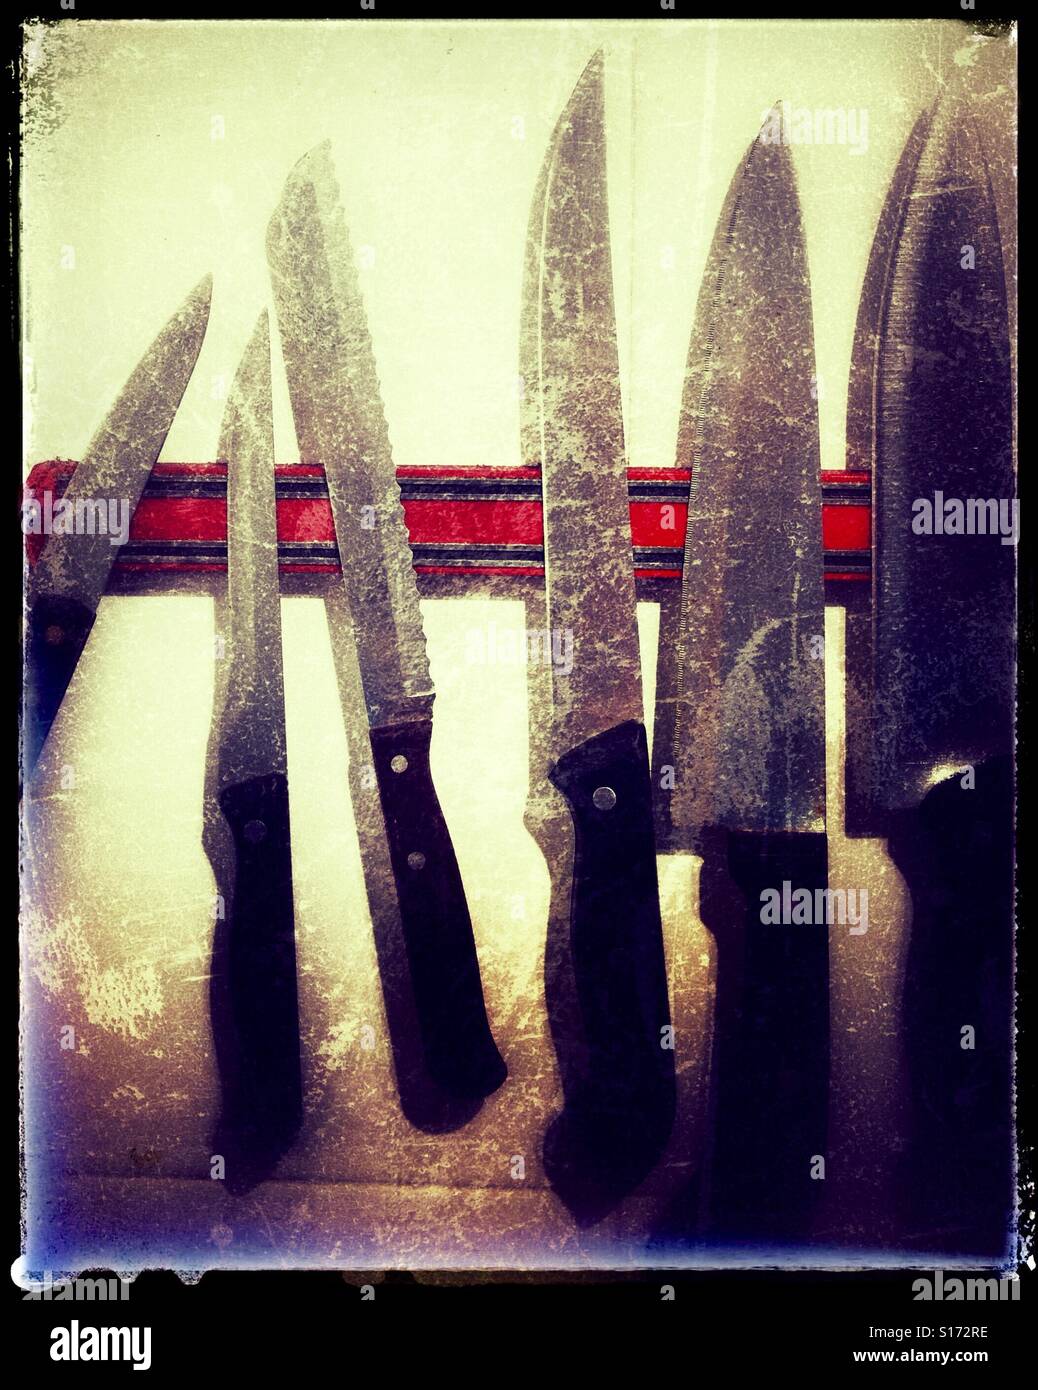 https://c8.alamy.com/compes/s172re/cuchillos-de-cocina-aparece-en-banda-magnetica-s172re.jpg